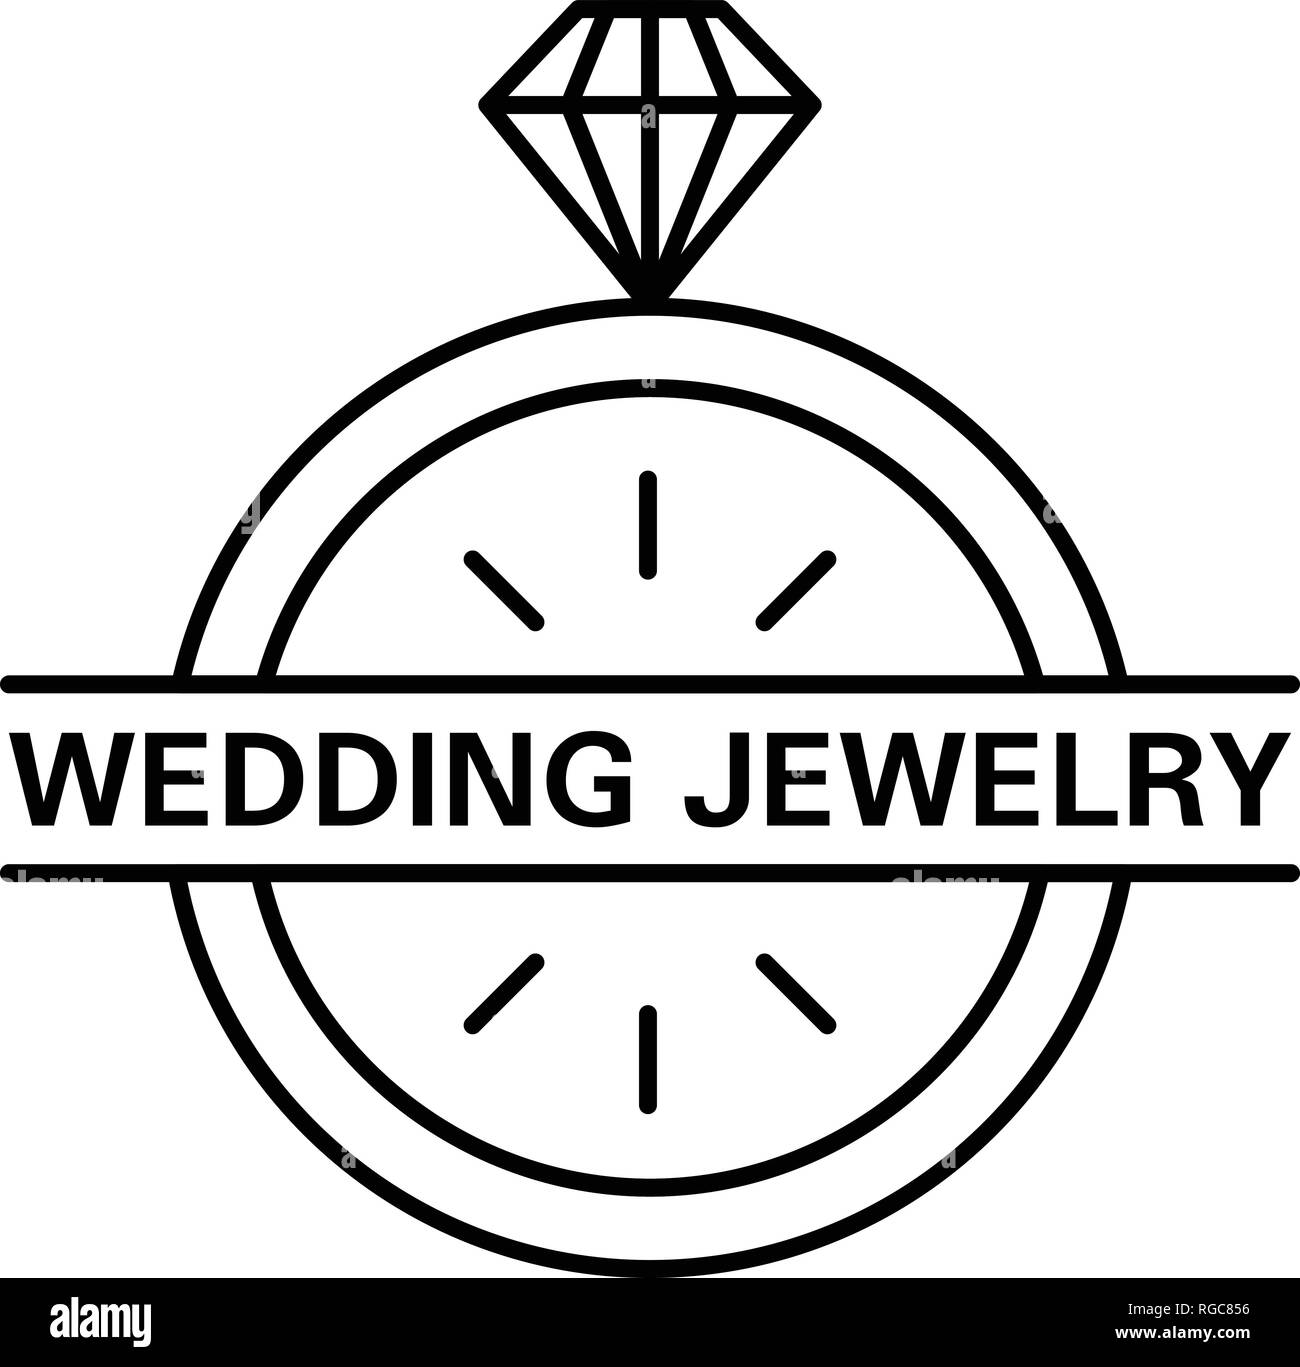 Wedding jewelry logo, outline style Stock Vector